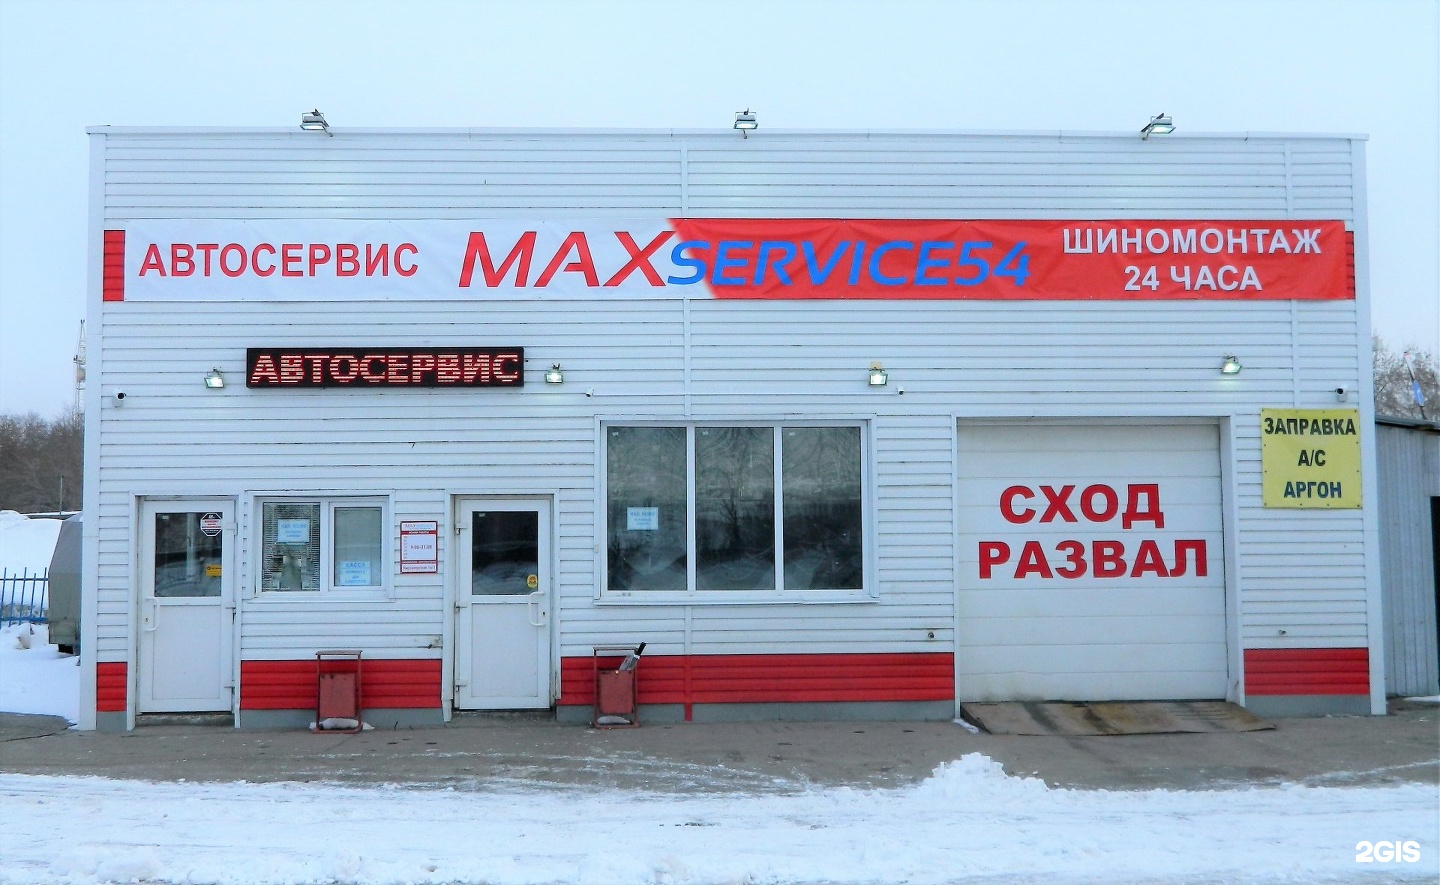 Max вывеска. Автосервис Новосибирск. Макси сервис в Березниках. Инторг-сервис Новосибирск.